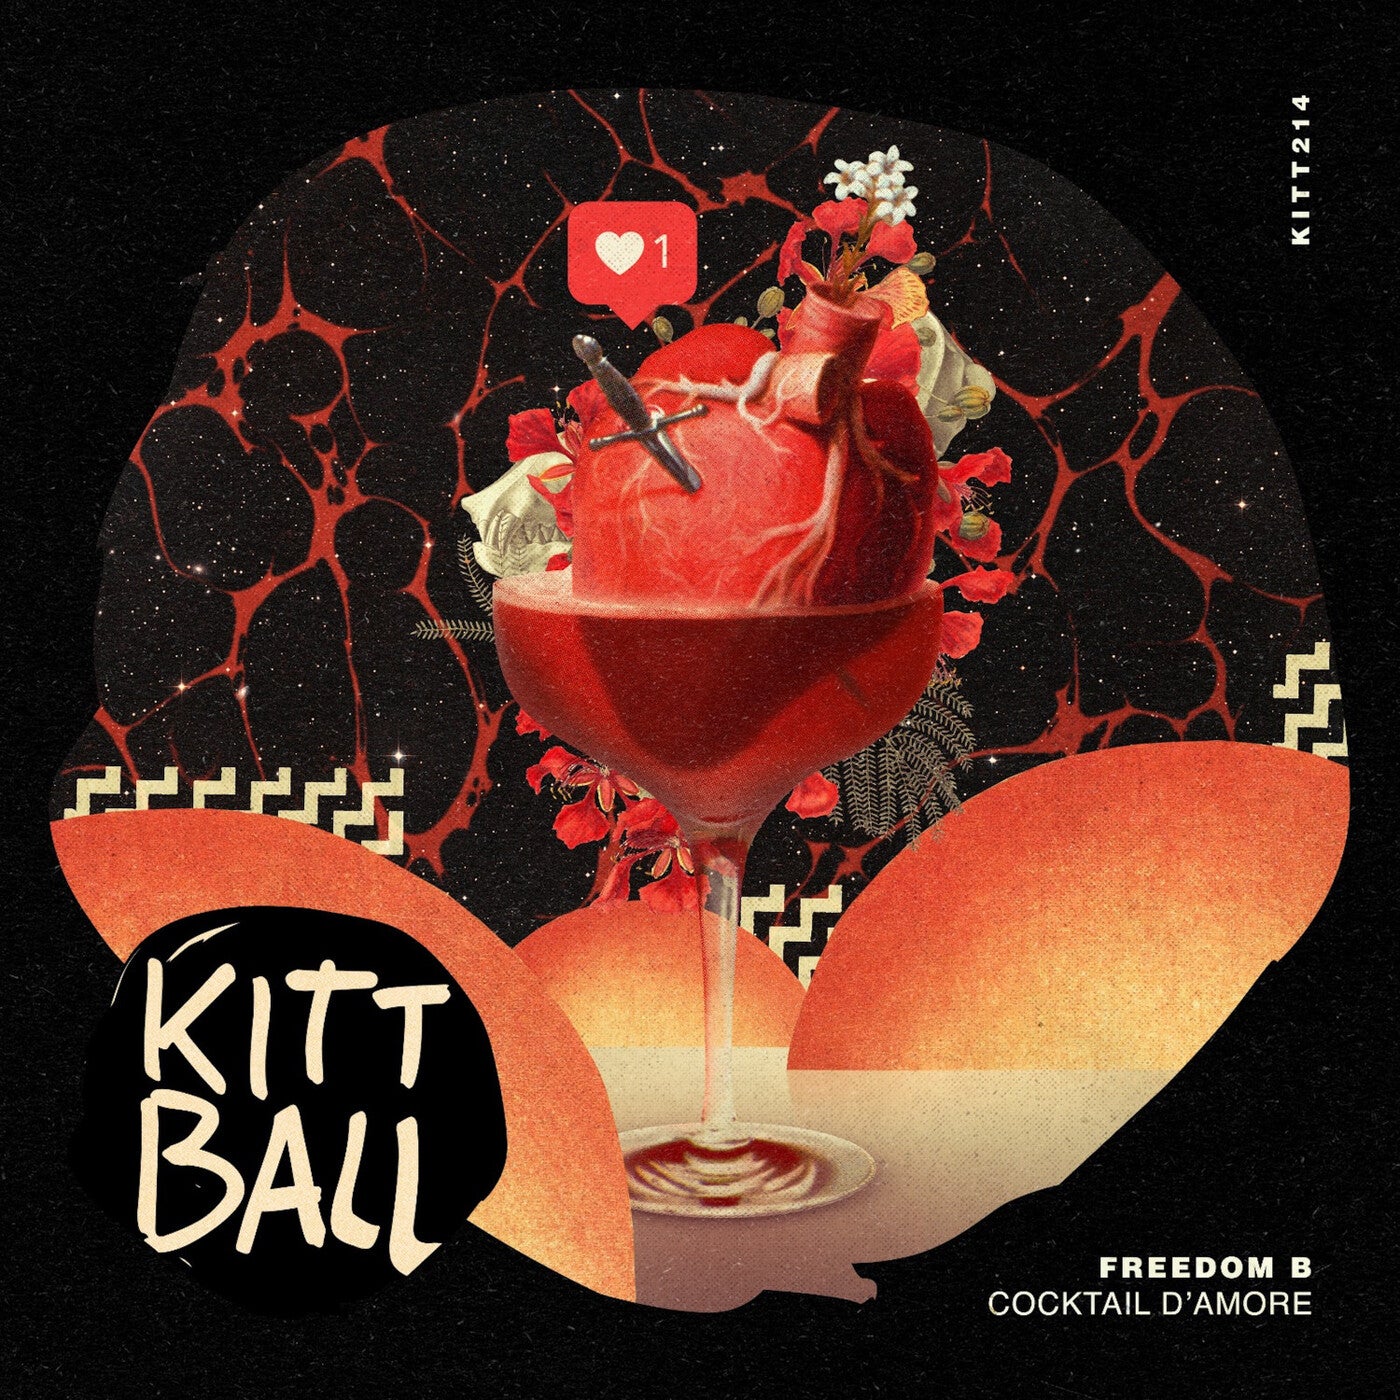 FreedomB – Cocktail d’Amore [KITT214]